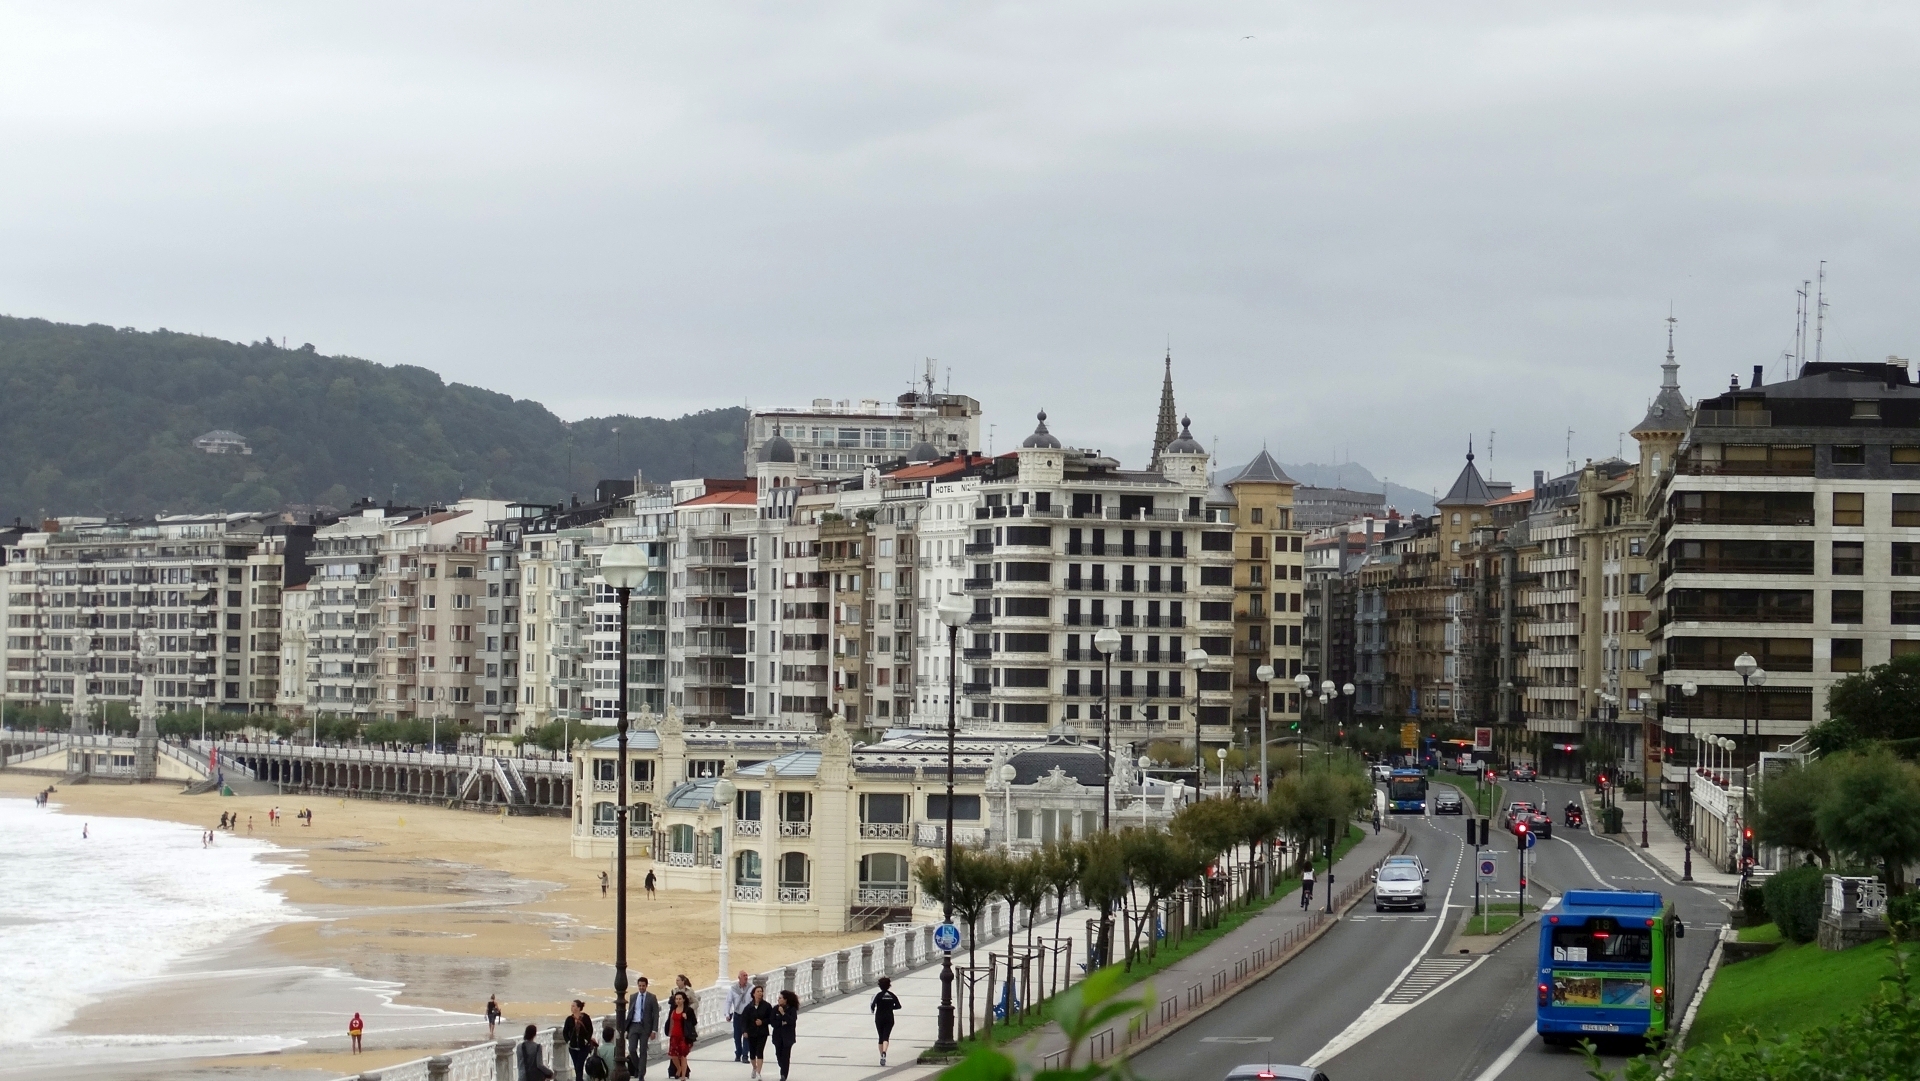 Donostia-San Sebastián